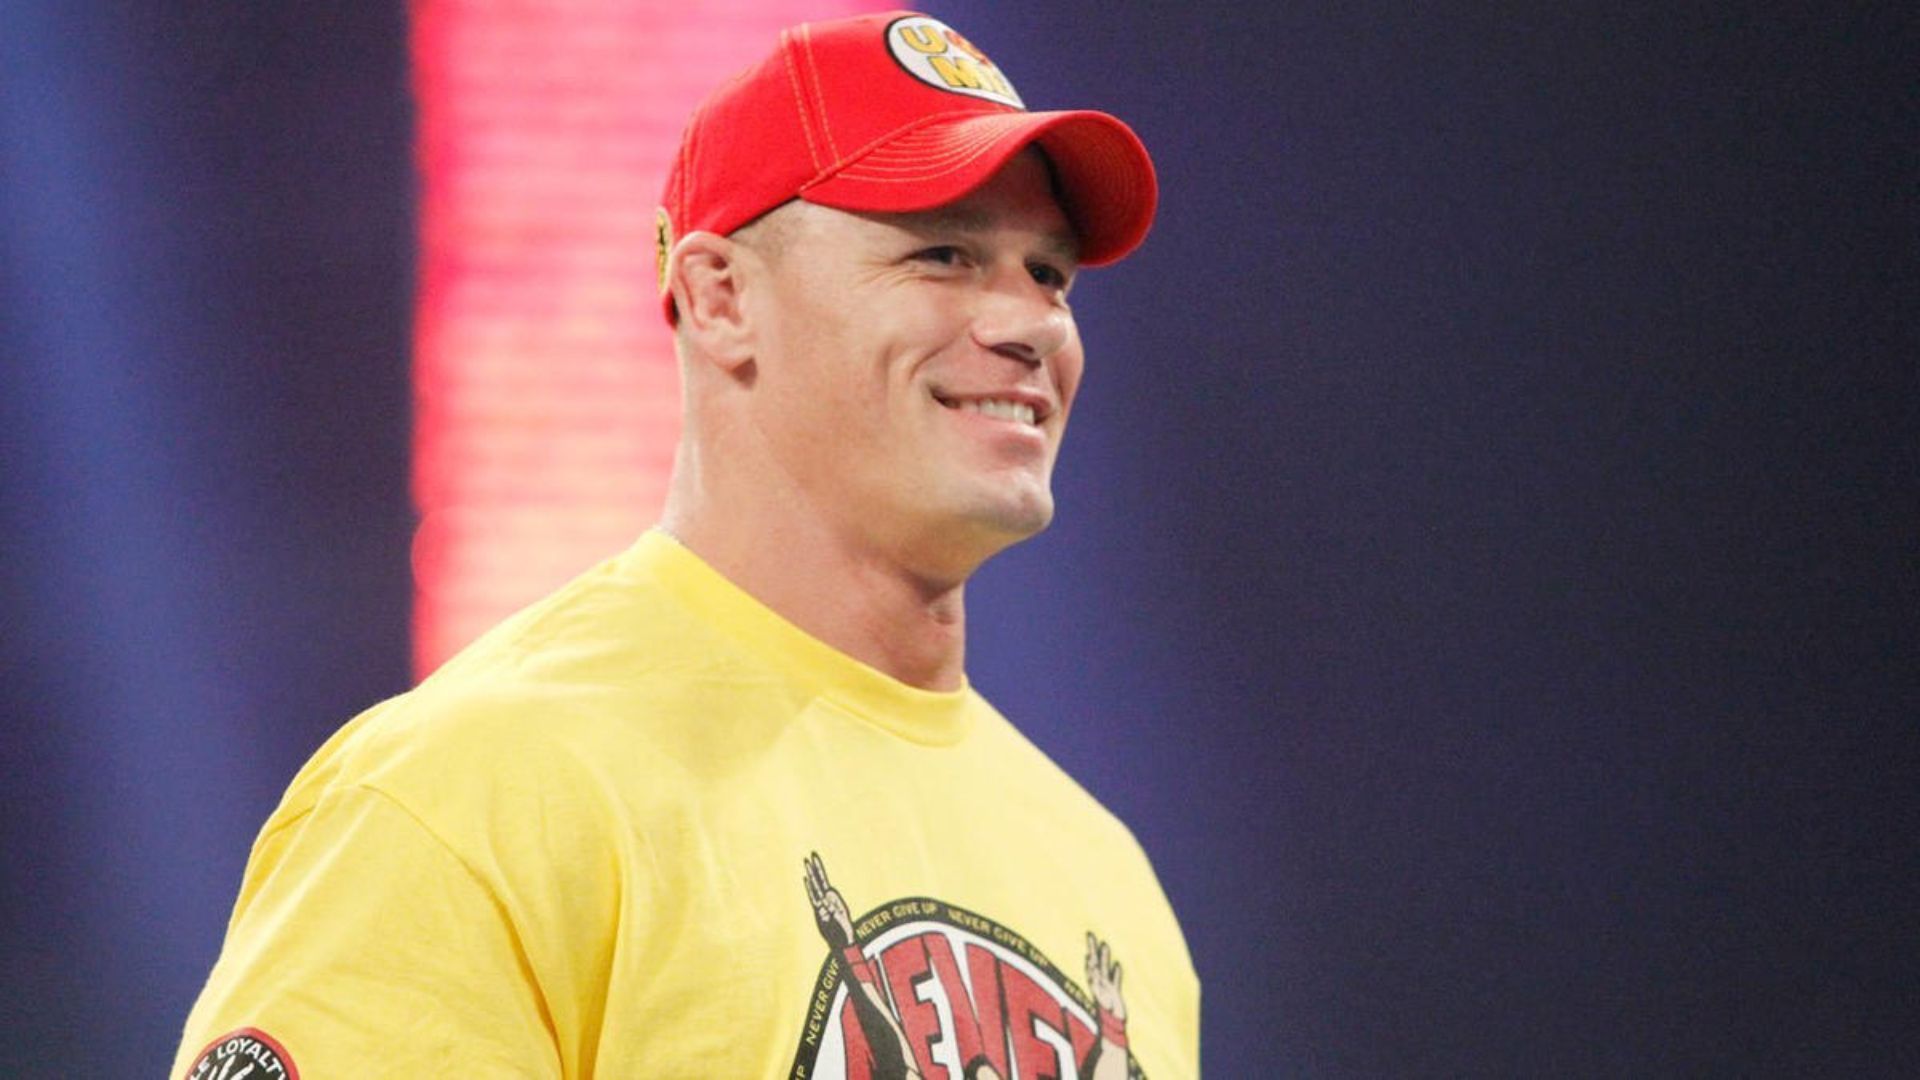 John Cena arguably best represents WWE